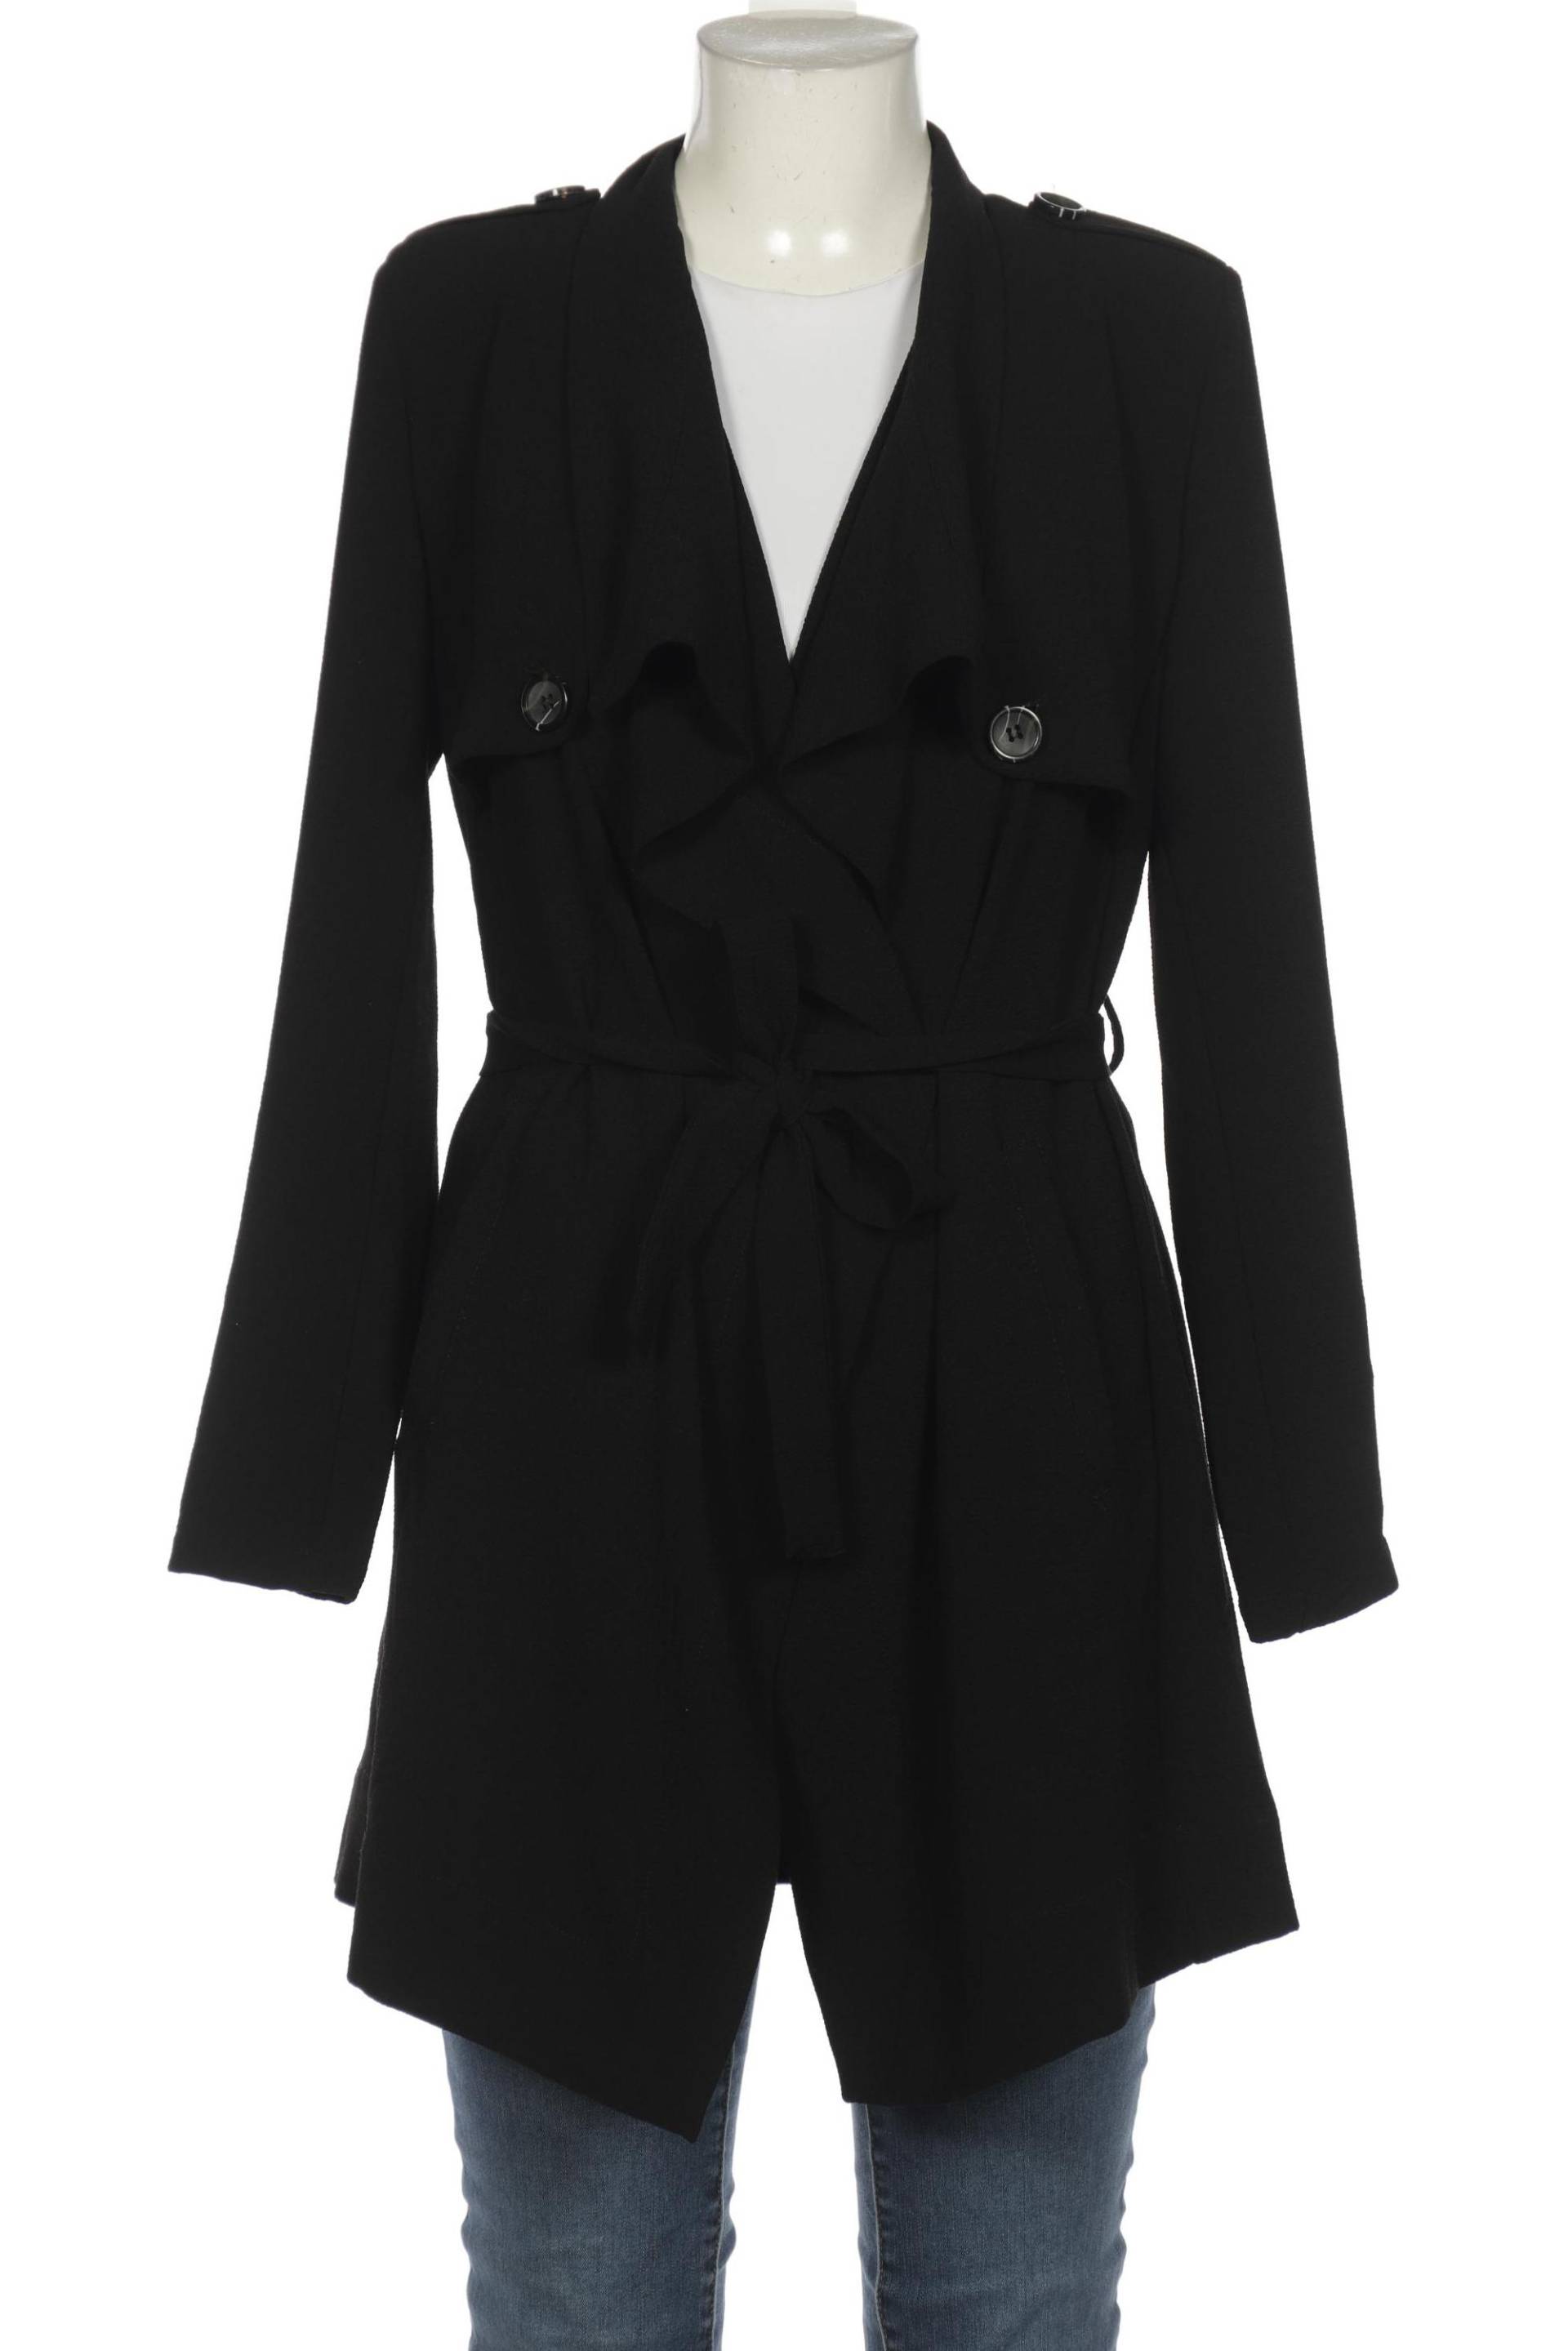 OBJECT Damen Mantel, schwarz von Object